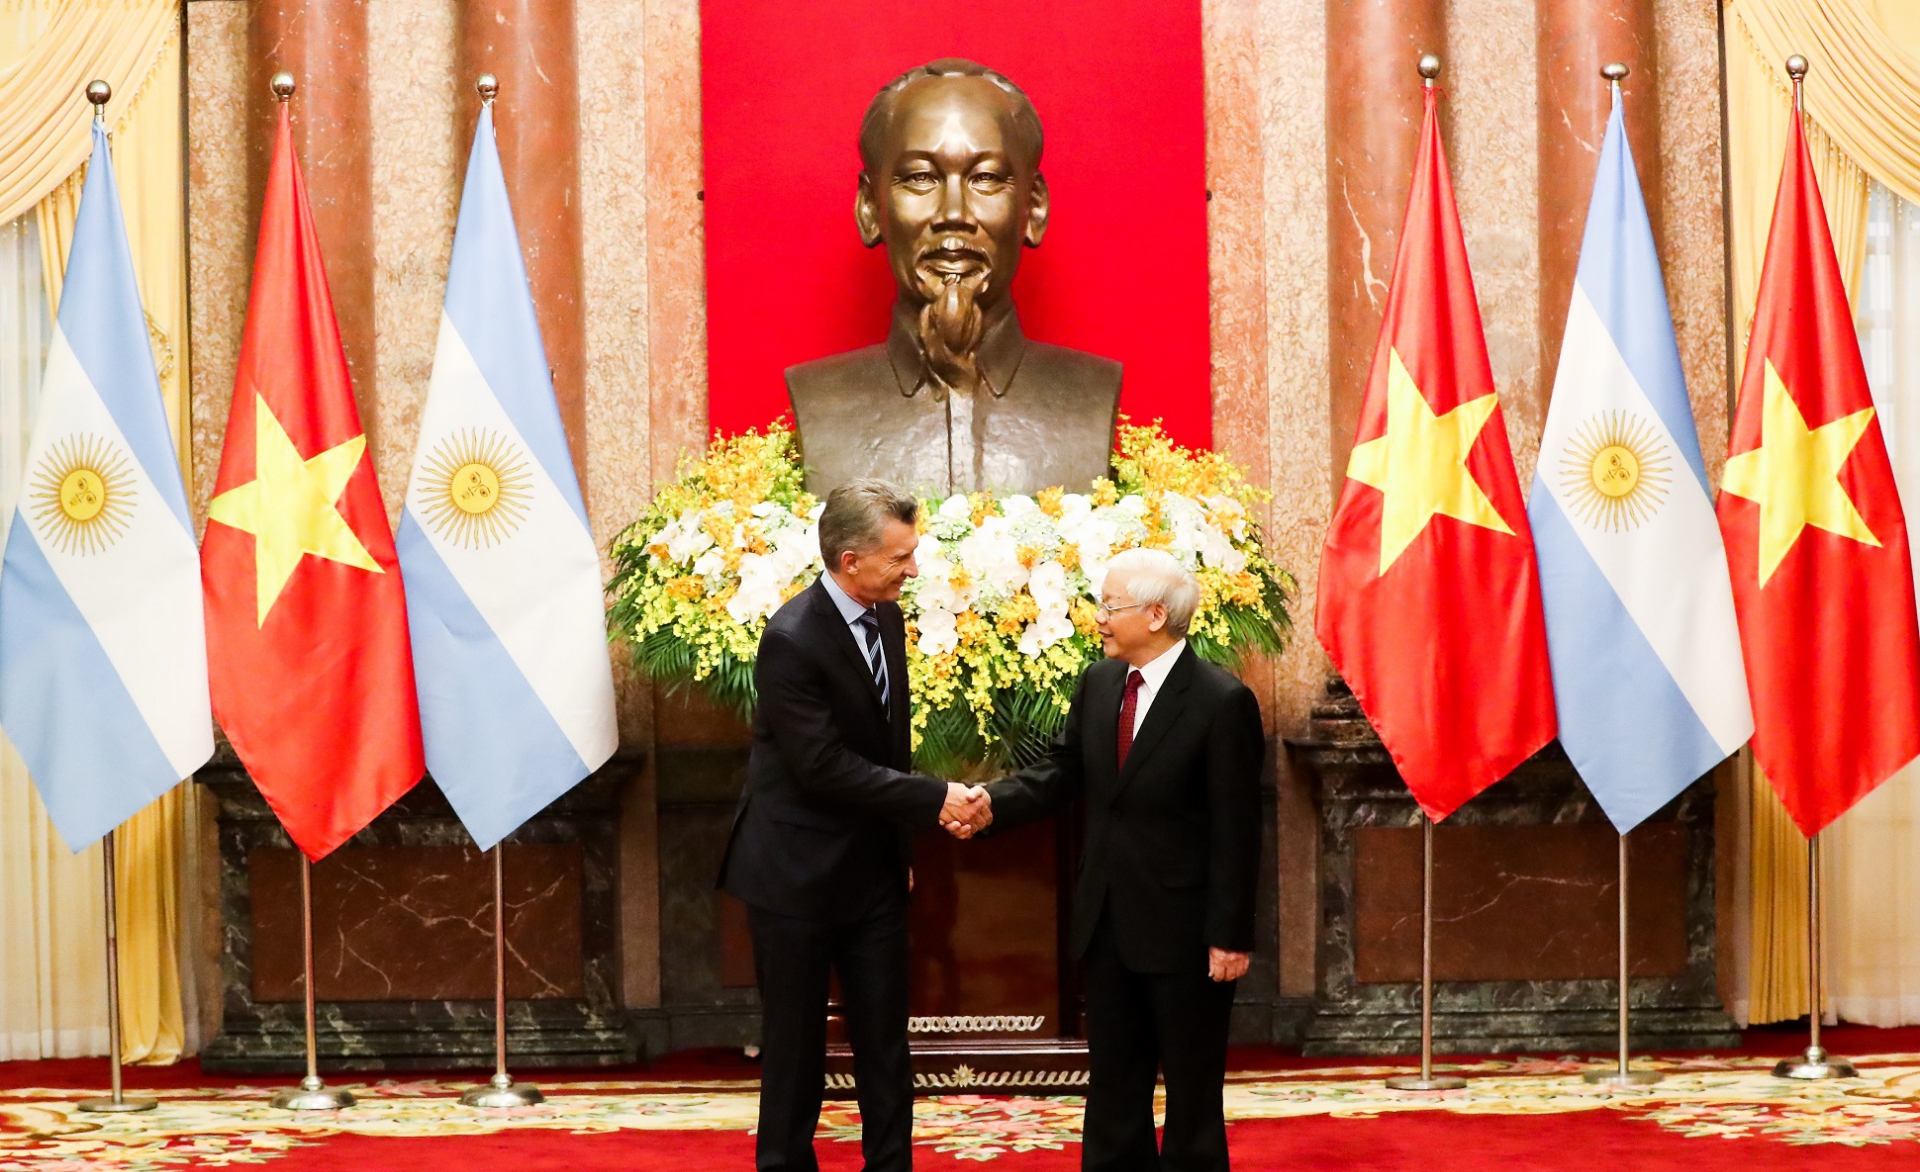 Joint Communiqué by the Argentine Republic and the Socialist Republic of Vietnam